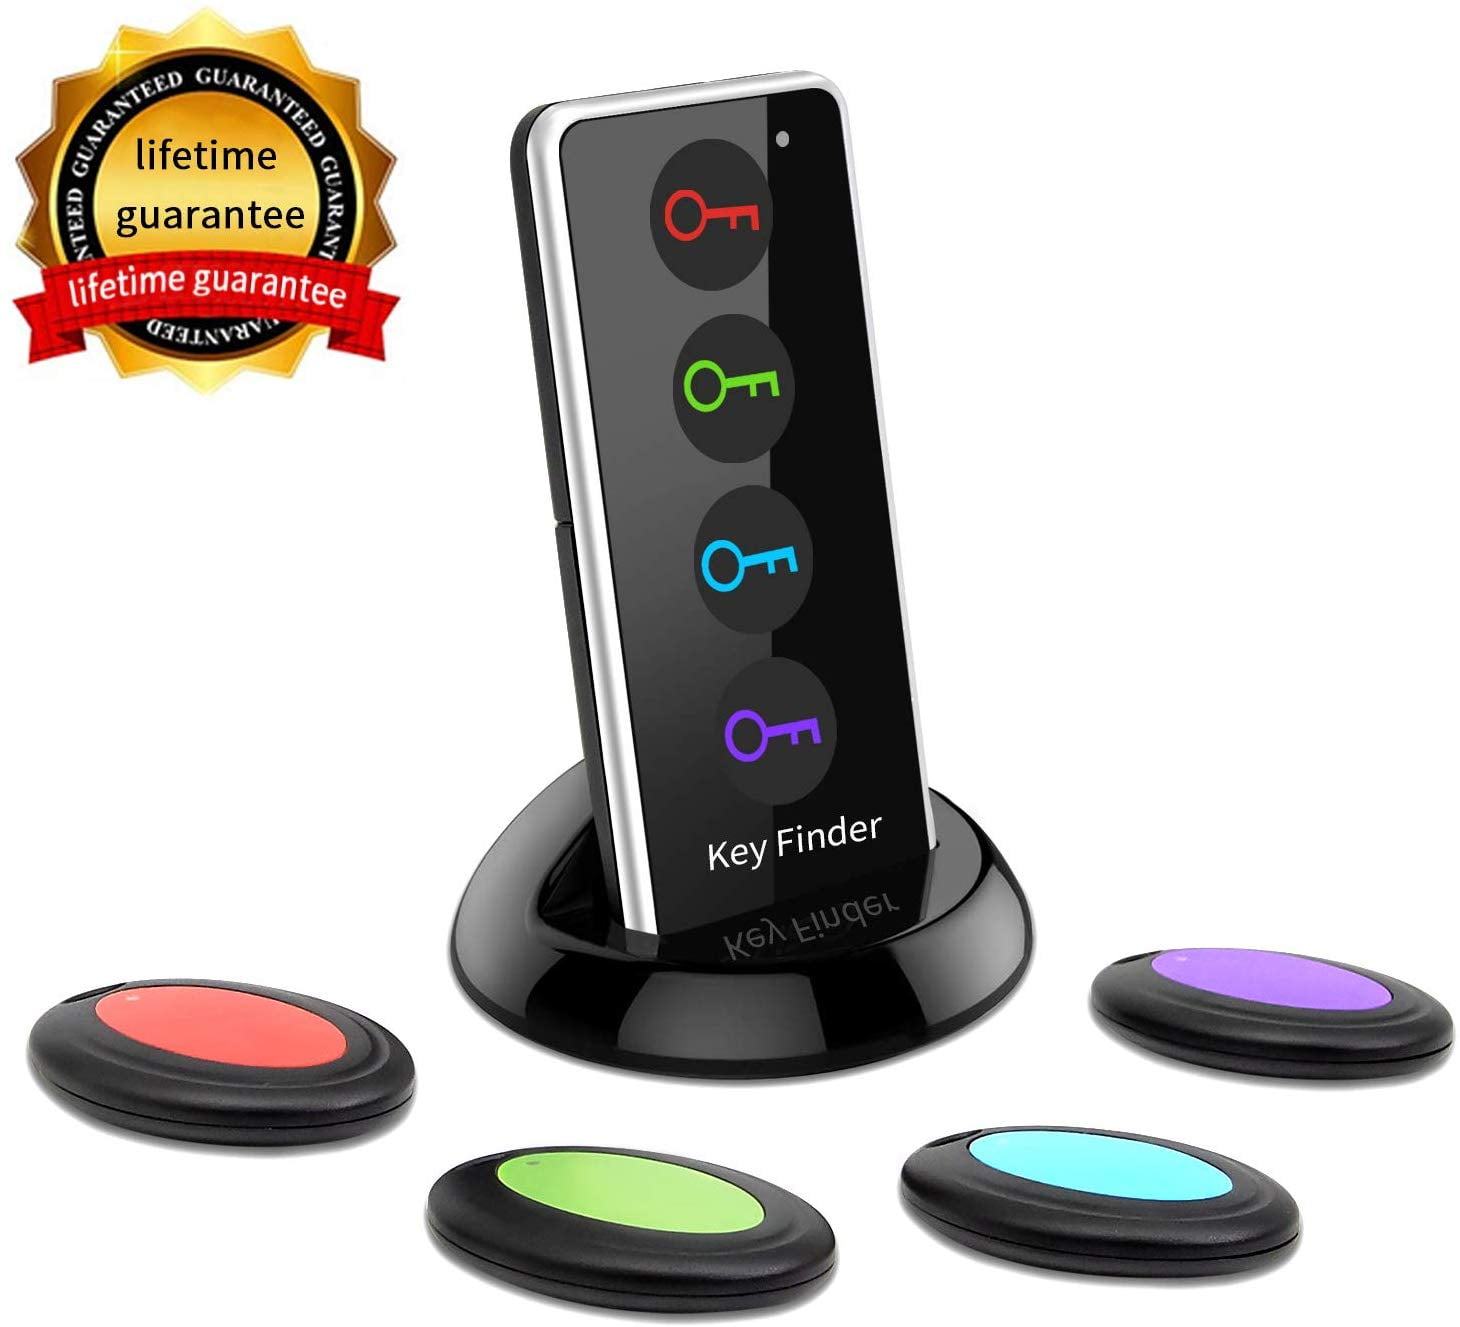 Key Finder FindKey Wireless Key RF Locator Item Anti-Lost Tag Alarm Reminder Tracker Remote Finder,1 RF Transmitter 4 Receivers,Phone Pets Keychain Wallet Luggage Tracking Tracker